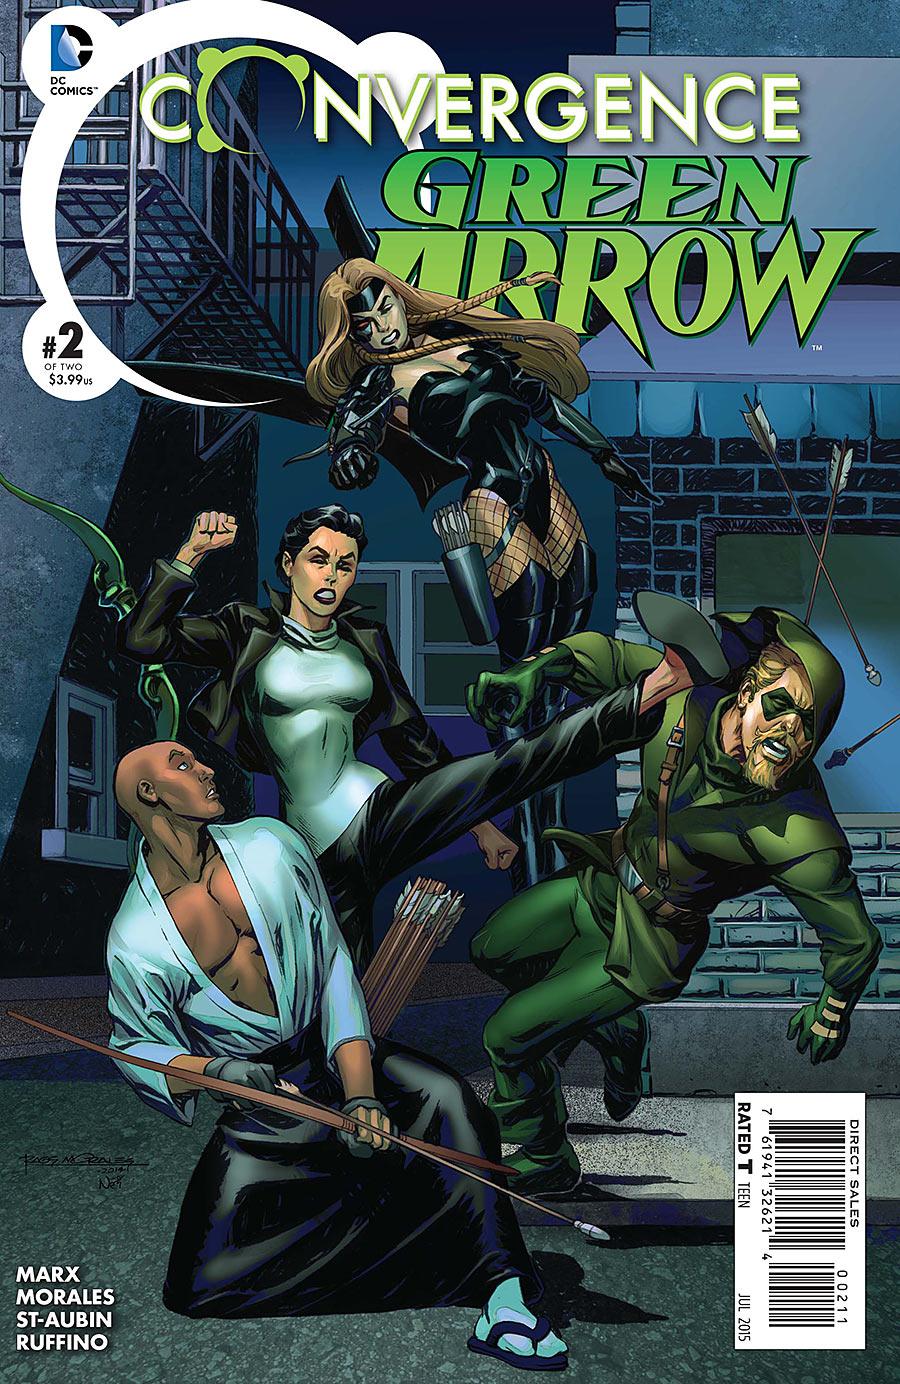 Convergence: Green Arrow Vol. 1 #2